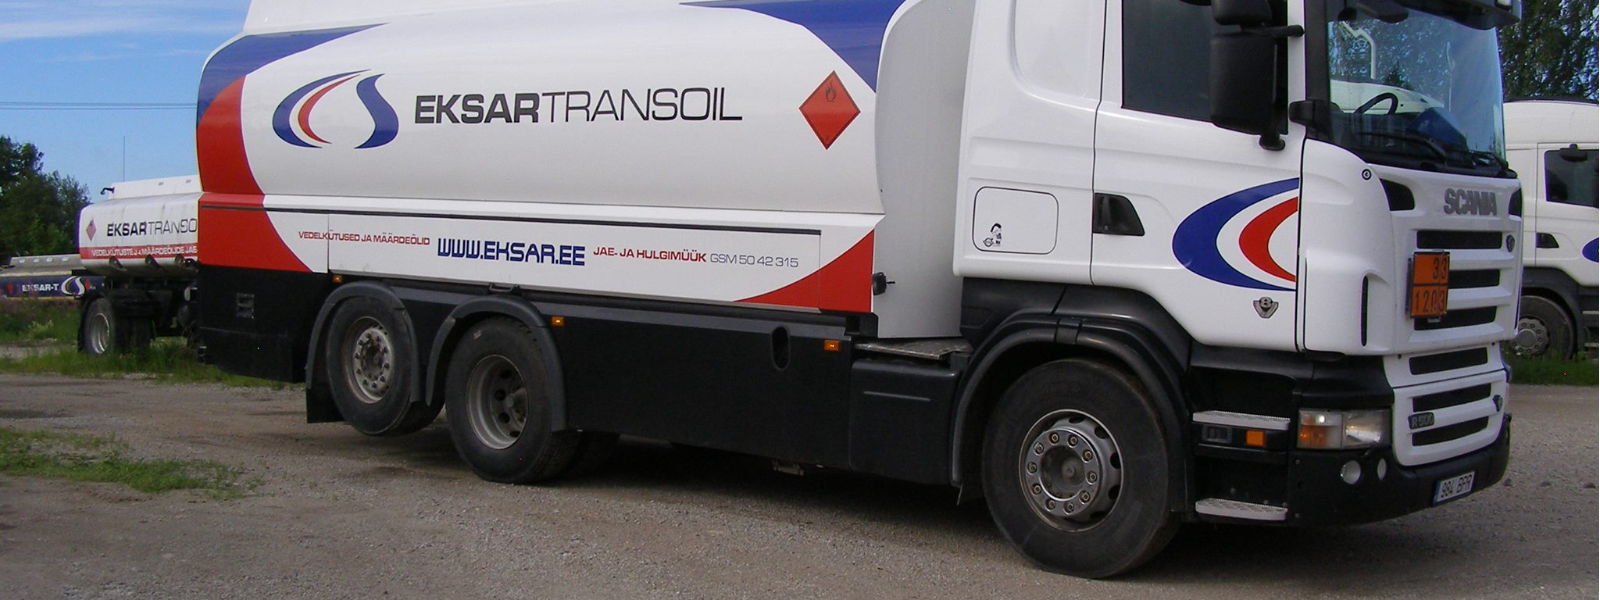 EKSAR-TRANSOIL AS - AS Eksar-Transoil tegutseb kütuse ja õlide turul alates 1989.a.